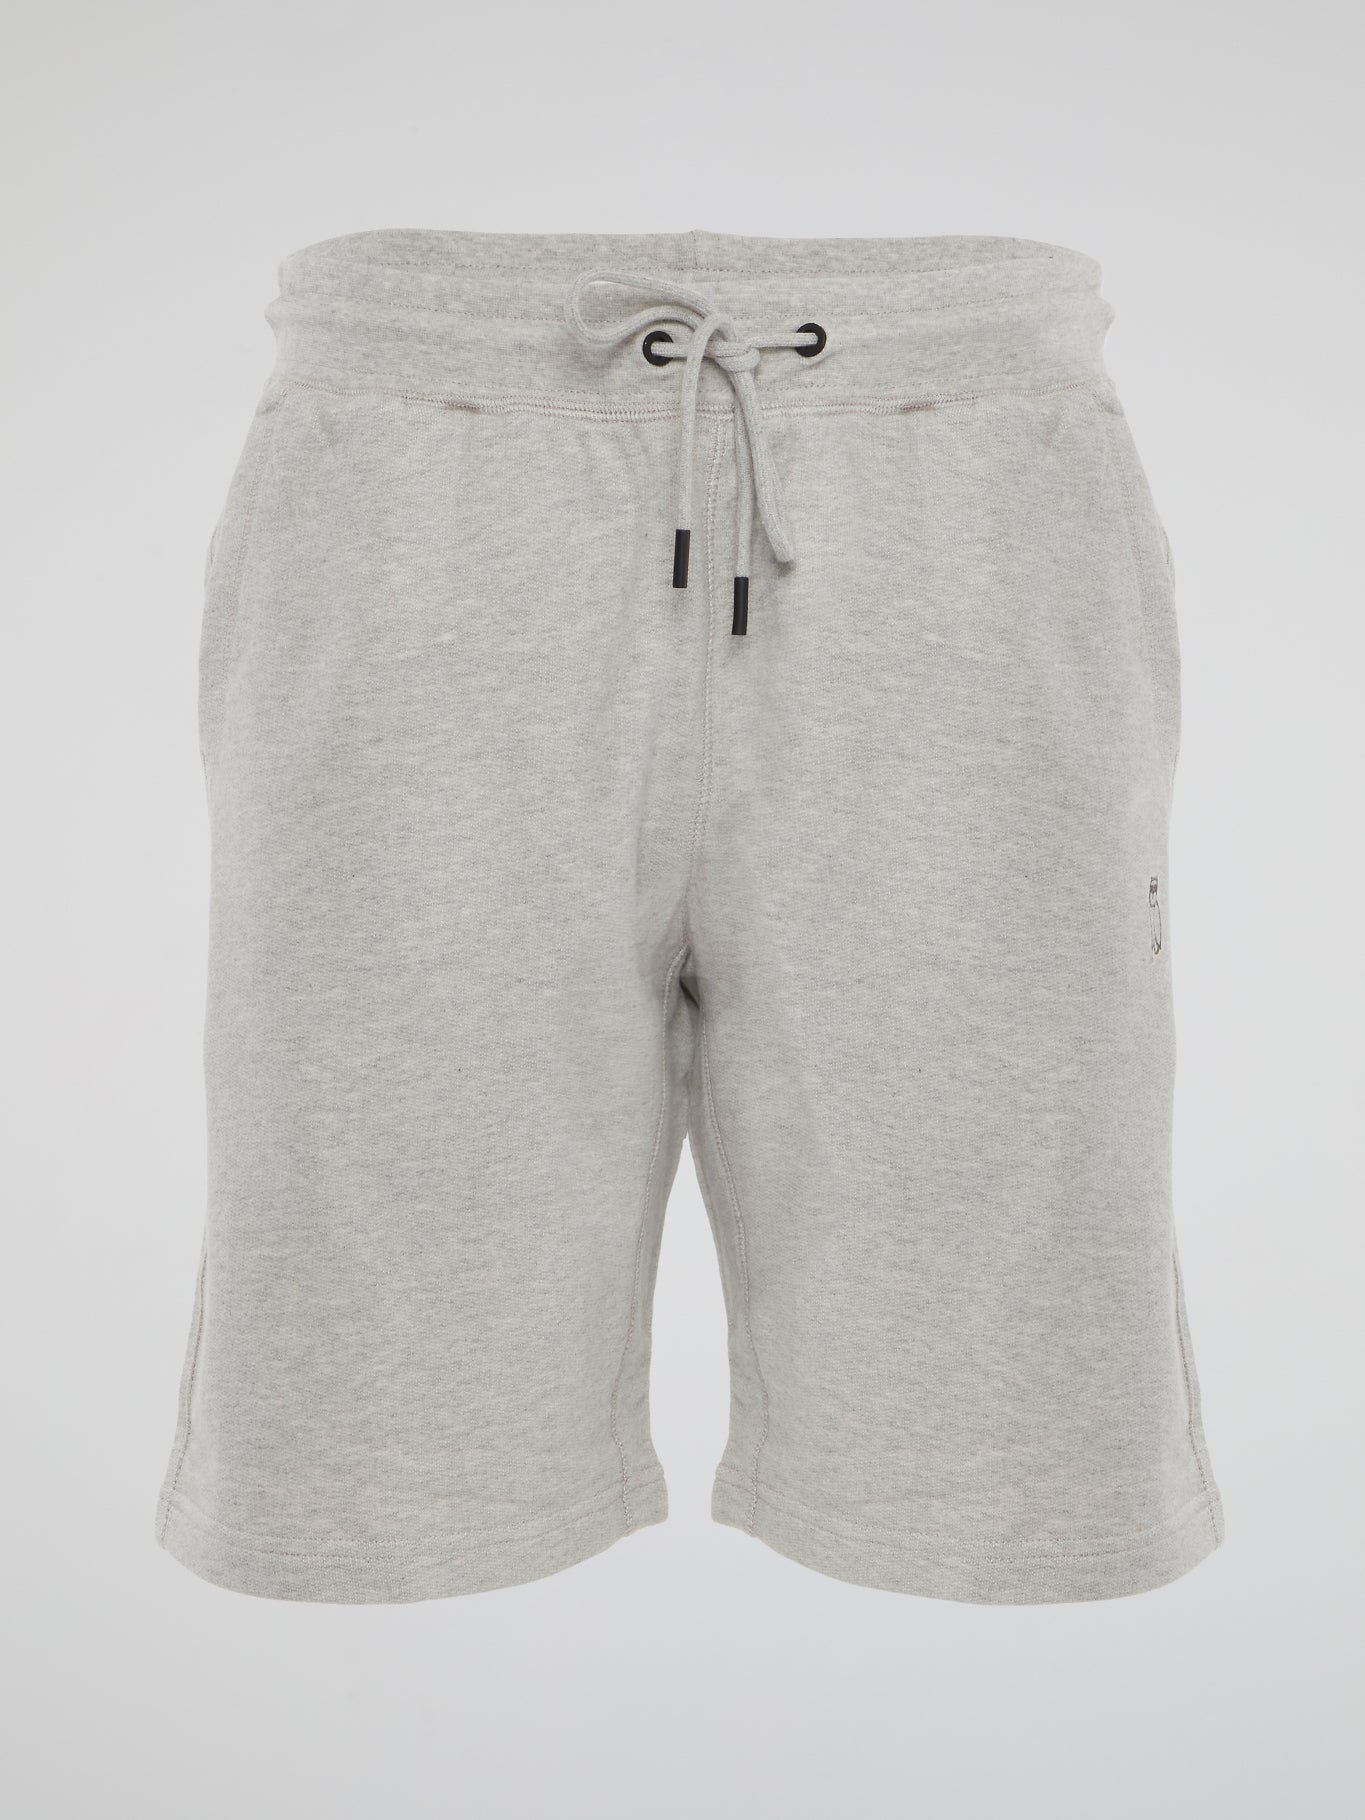 Shorts Grey Maison-B-More Sweat – Store Essentials Global